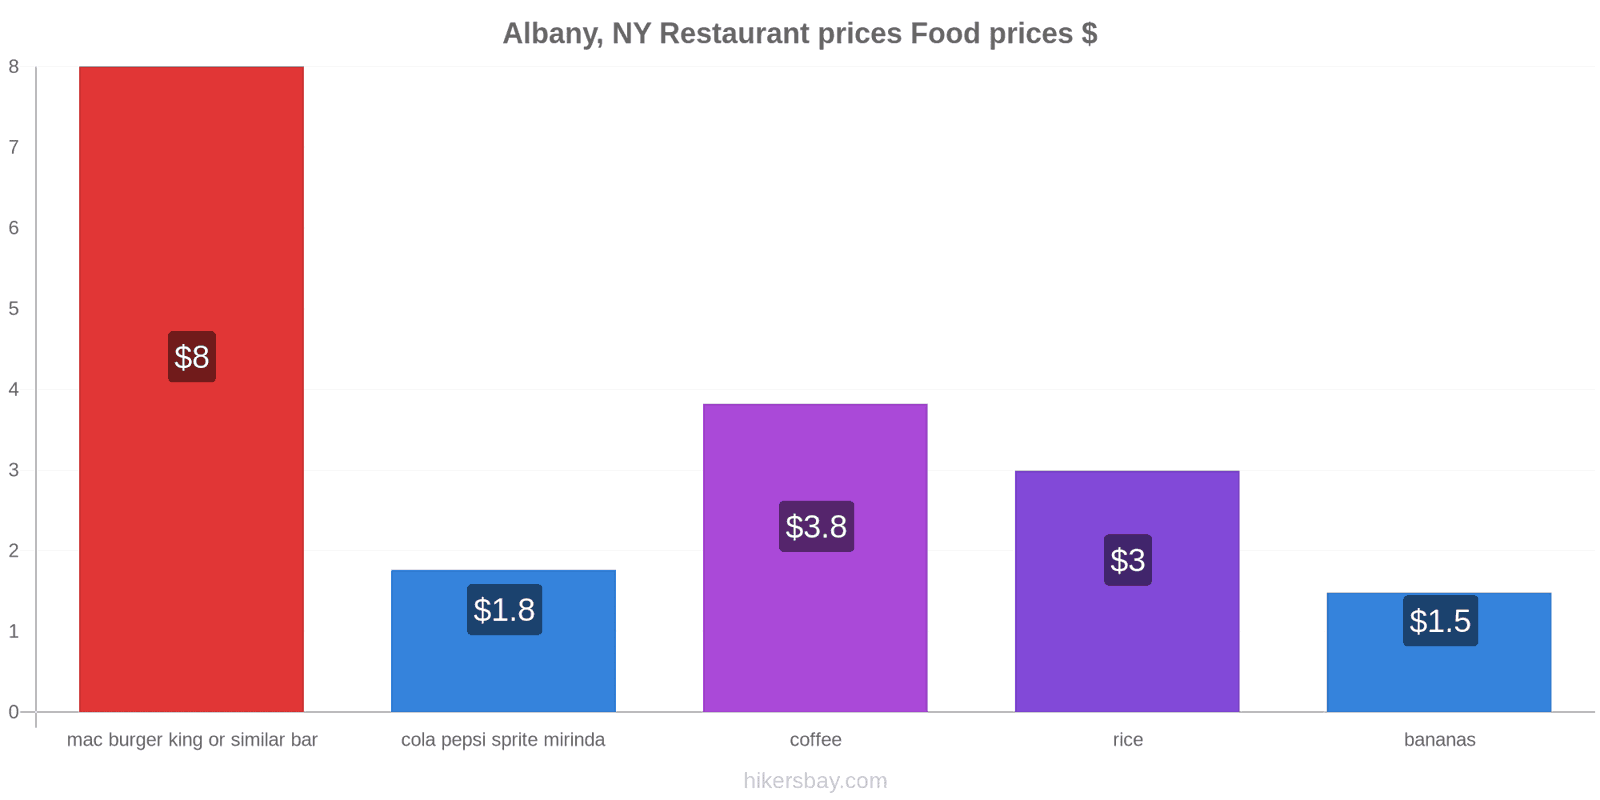 Albany, NY price changes hikersbay.com